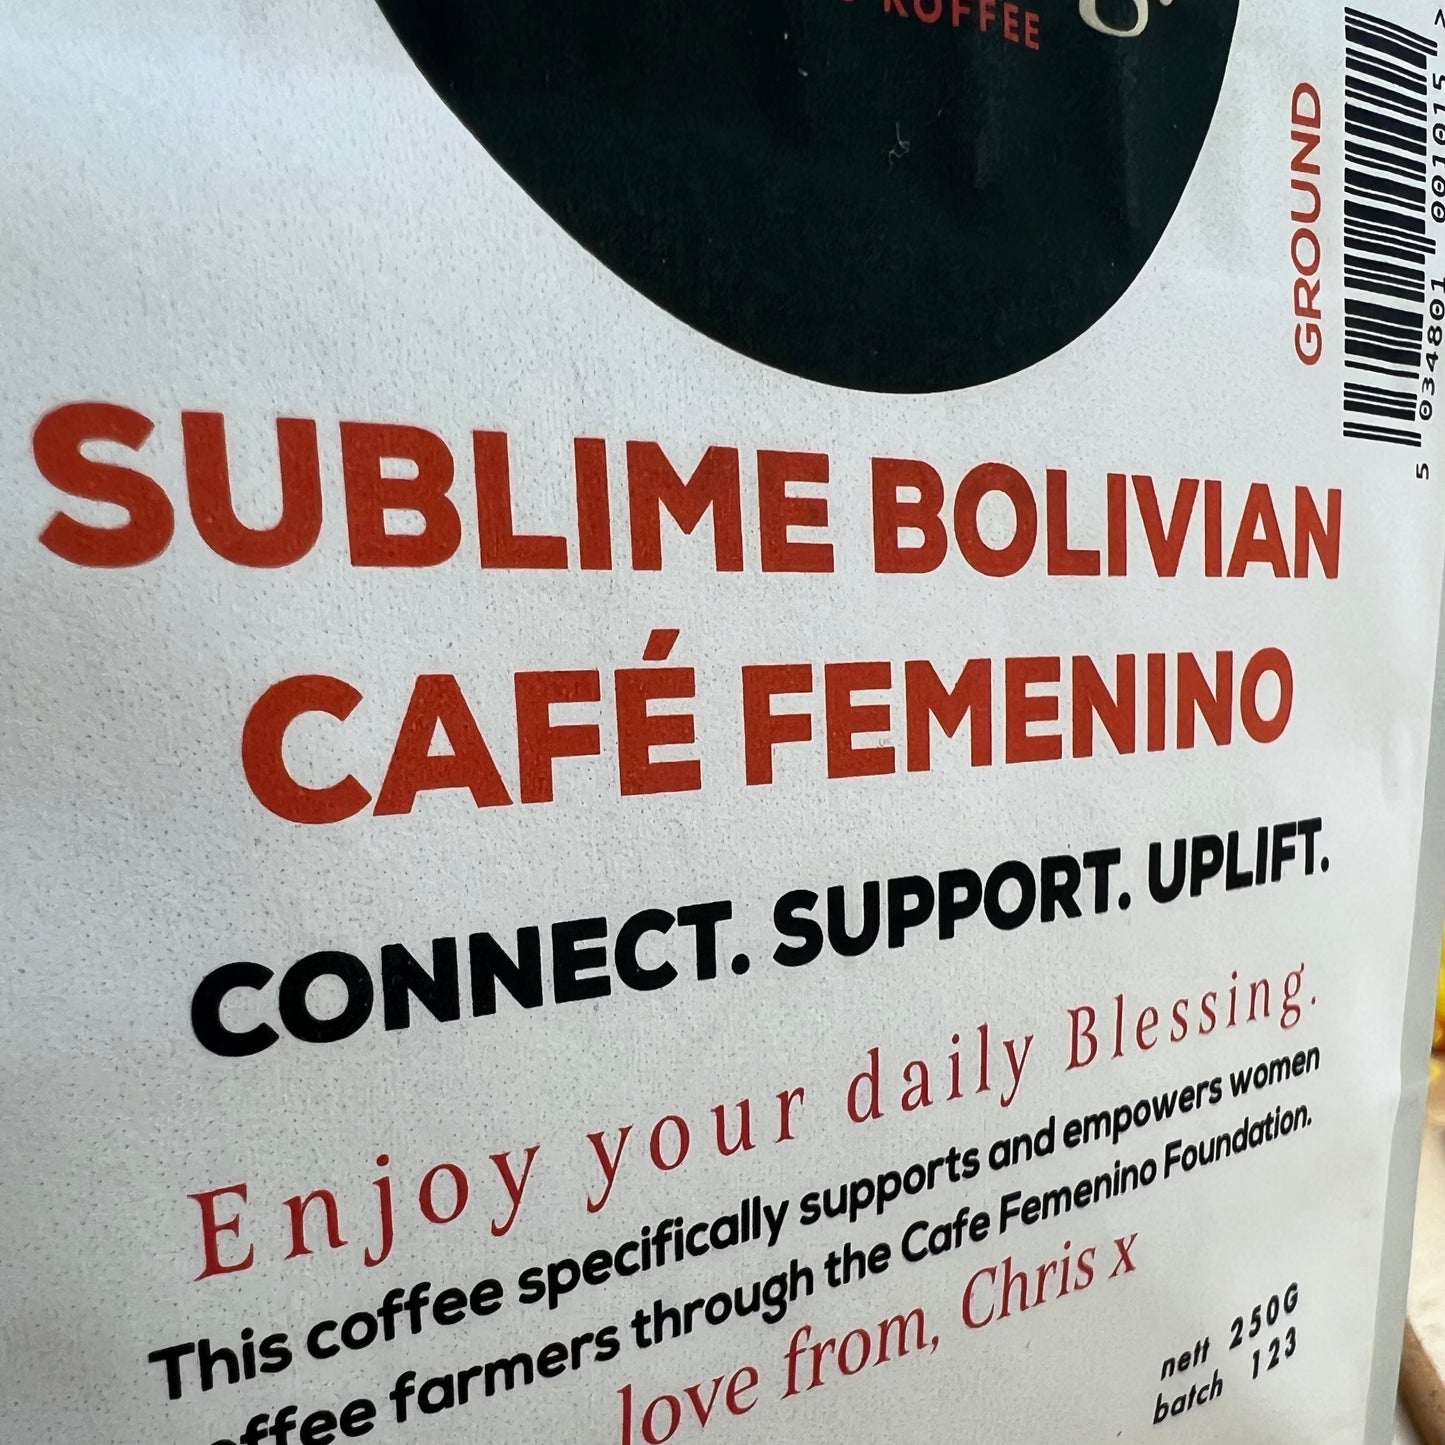 Sublime Bolivian Cafe Femenino